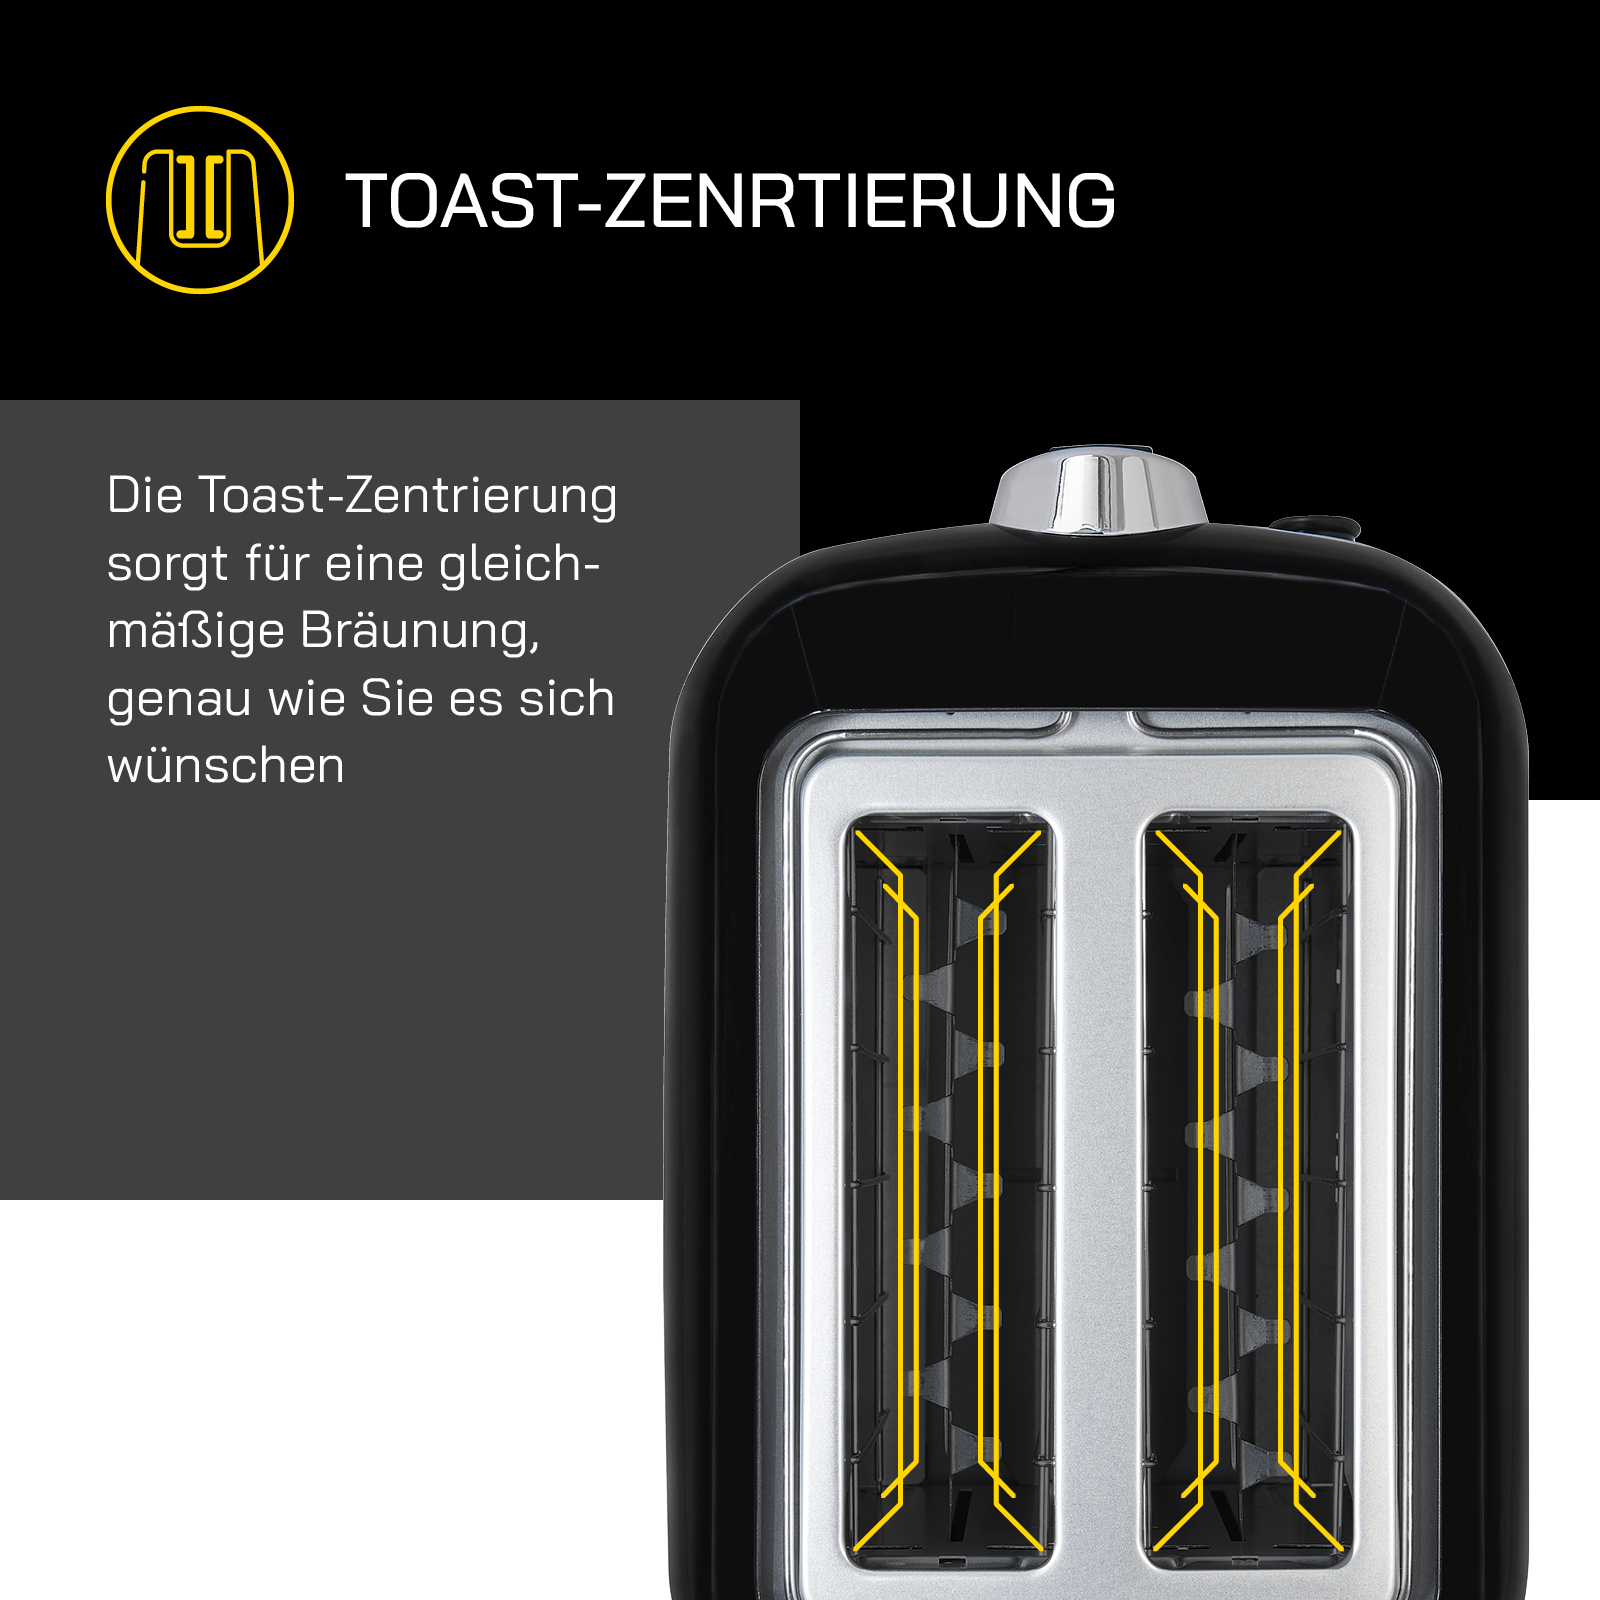 Watt, Schlitze: TOAST 2) C (1050 Toaster GUTFELS Schwarz 3300